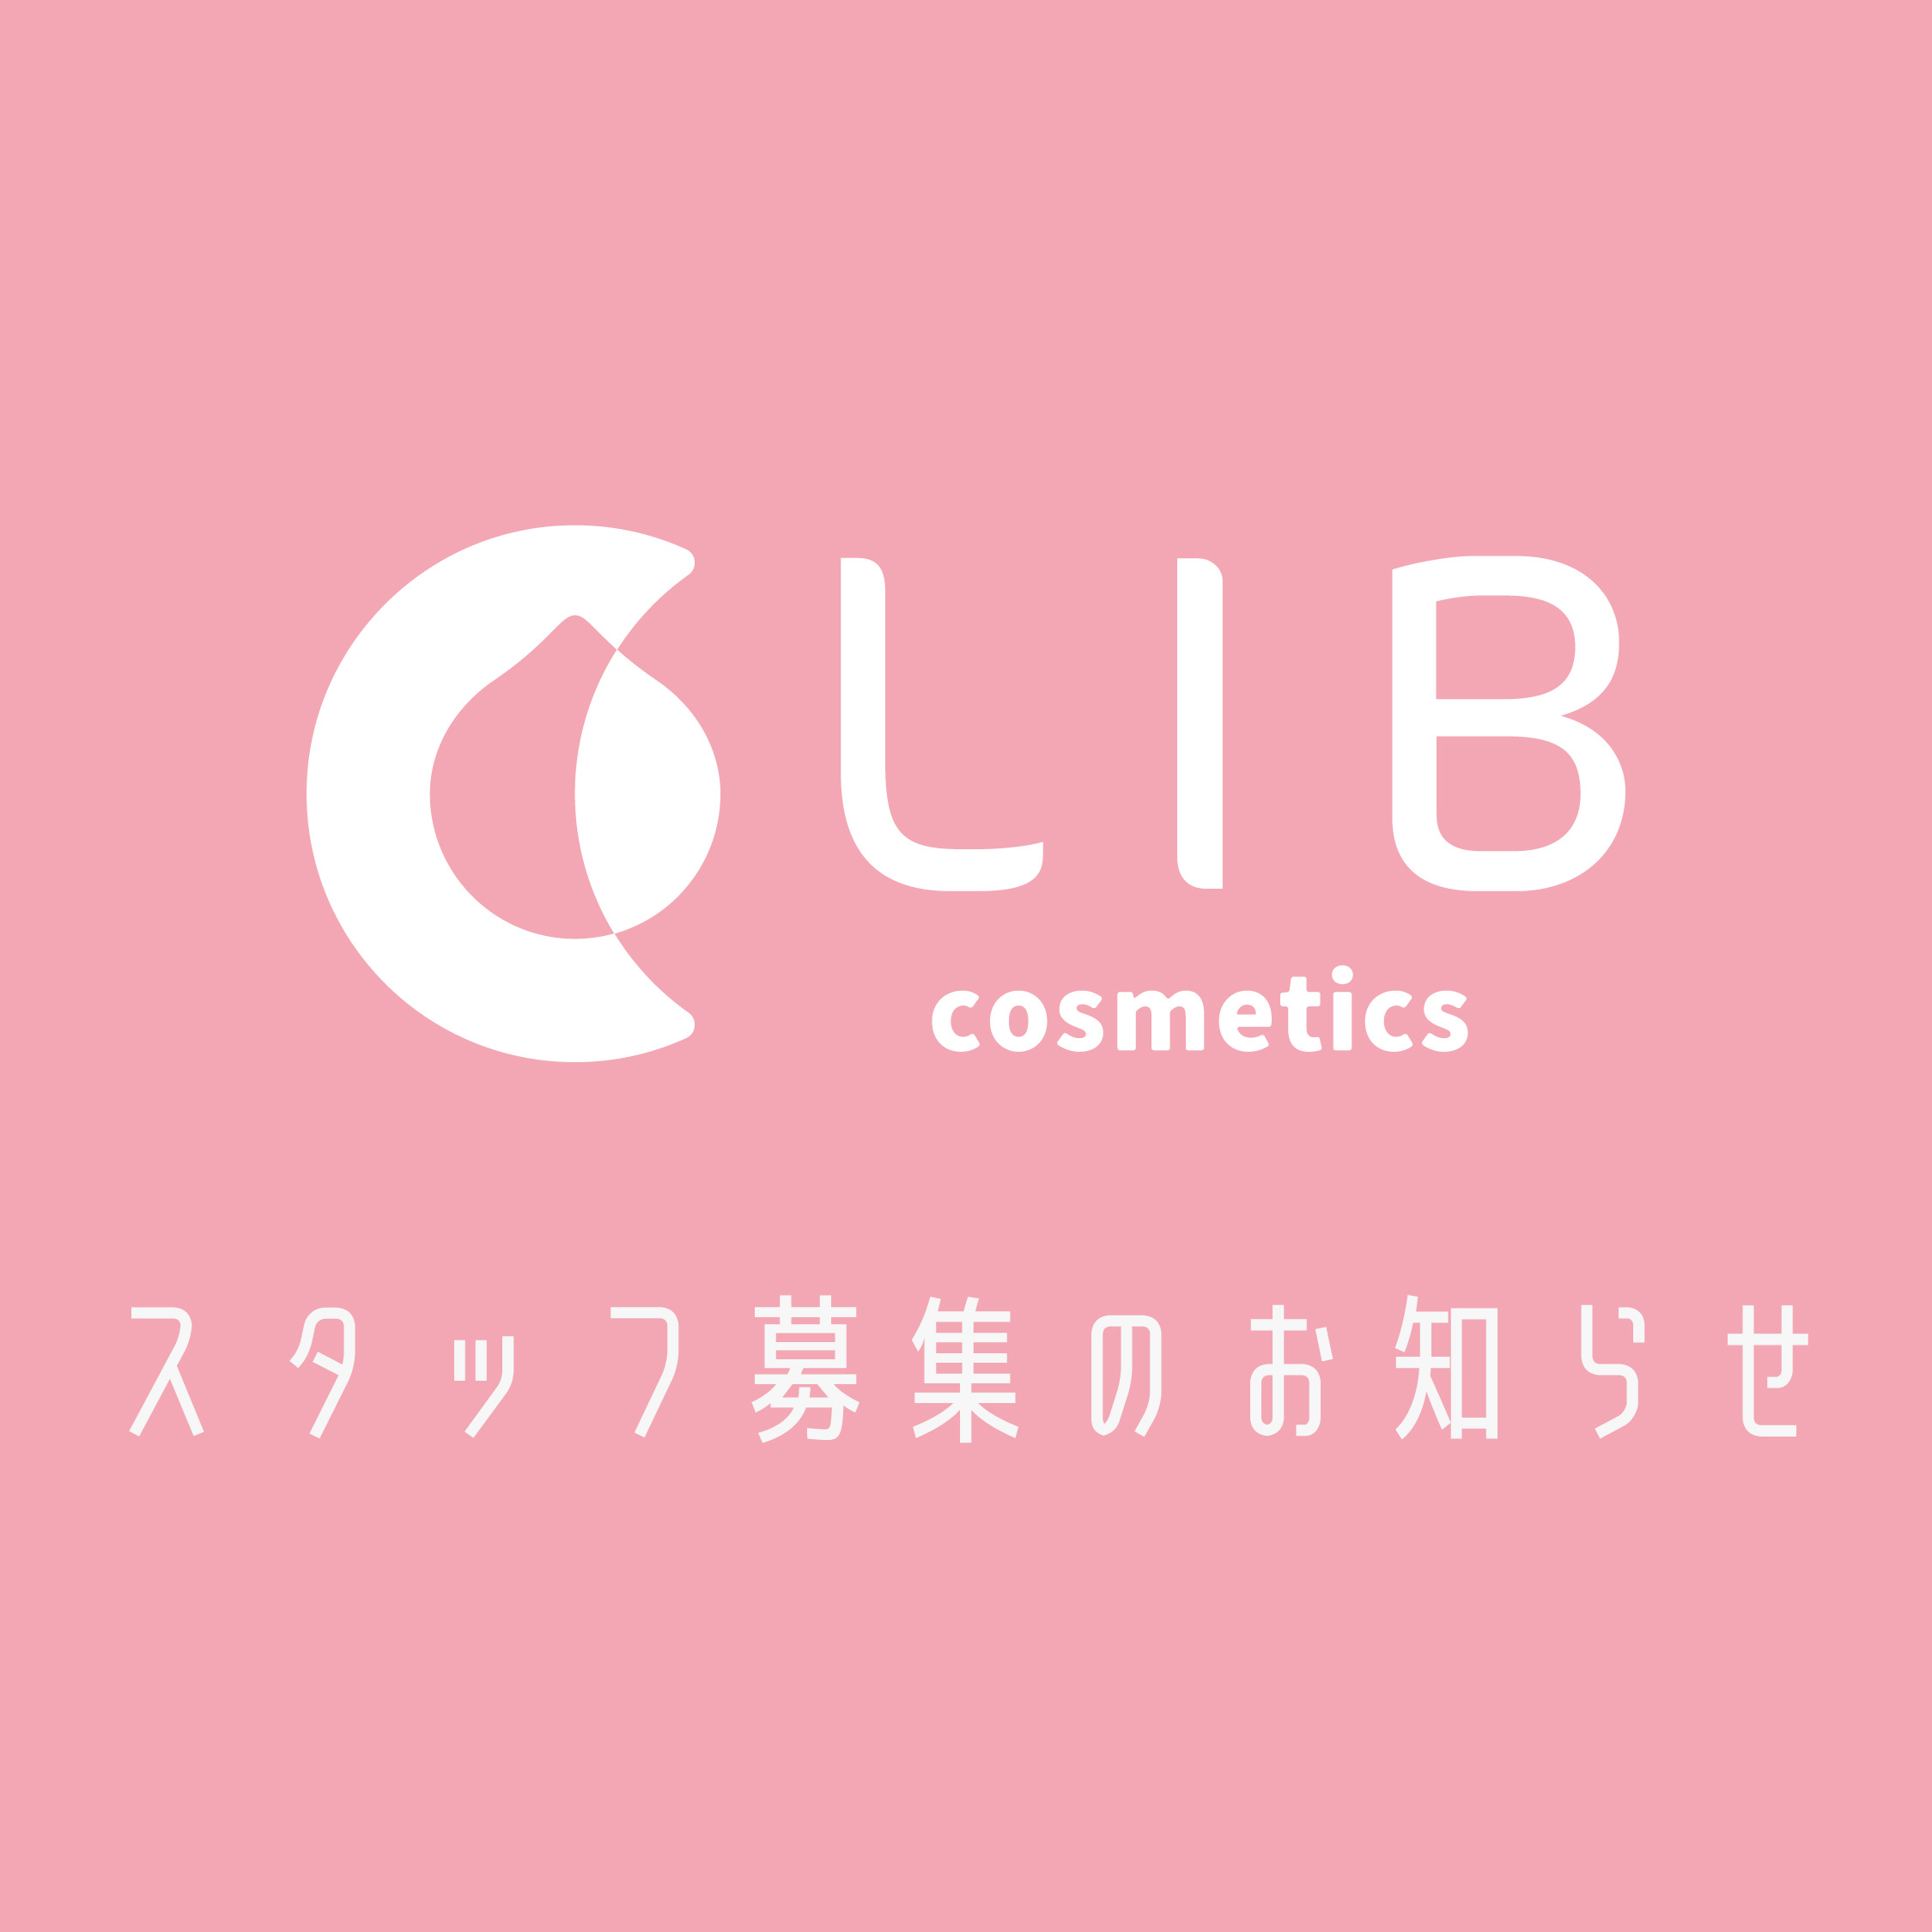 【LIB Cosmetics】スタッフ募集のお知らせ